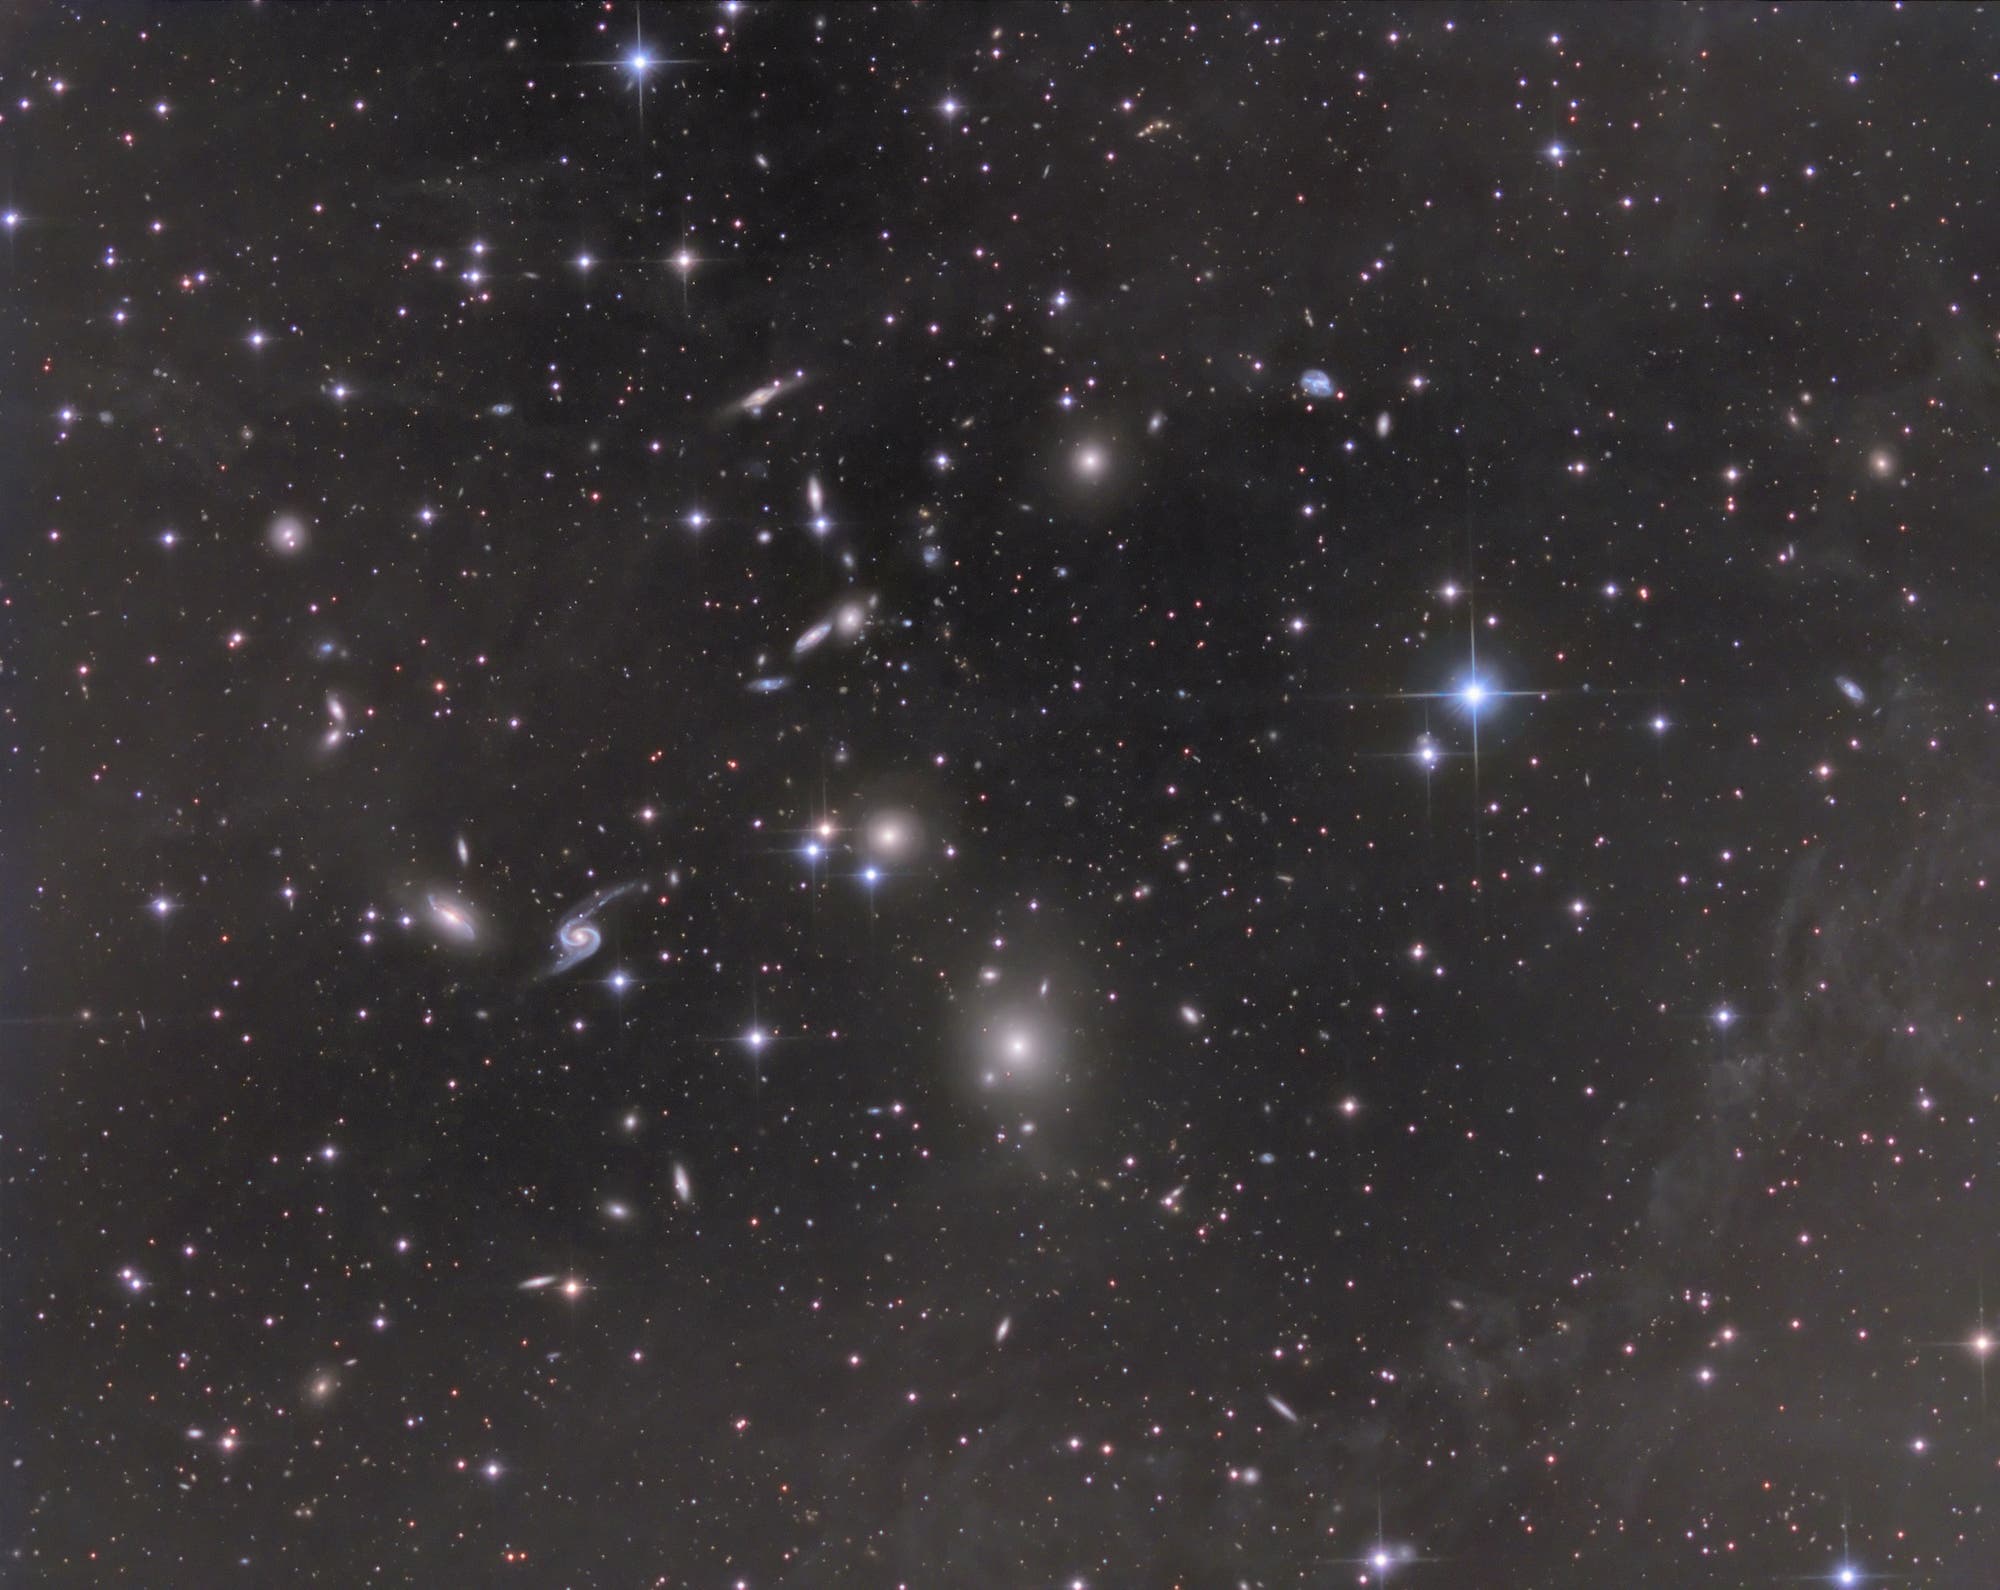 Galaxiengruppe NGC 80 - Ein staubfreies Fenster